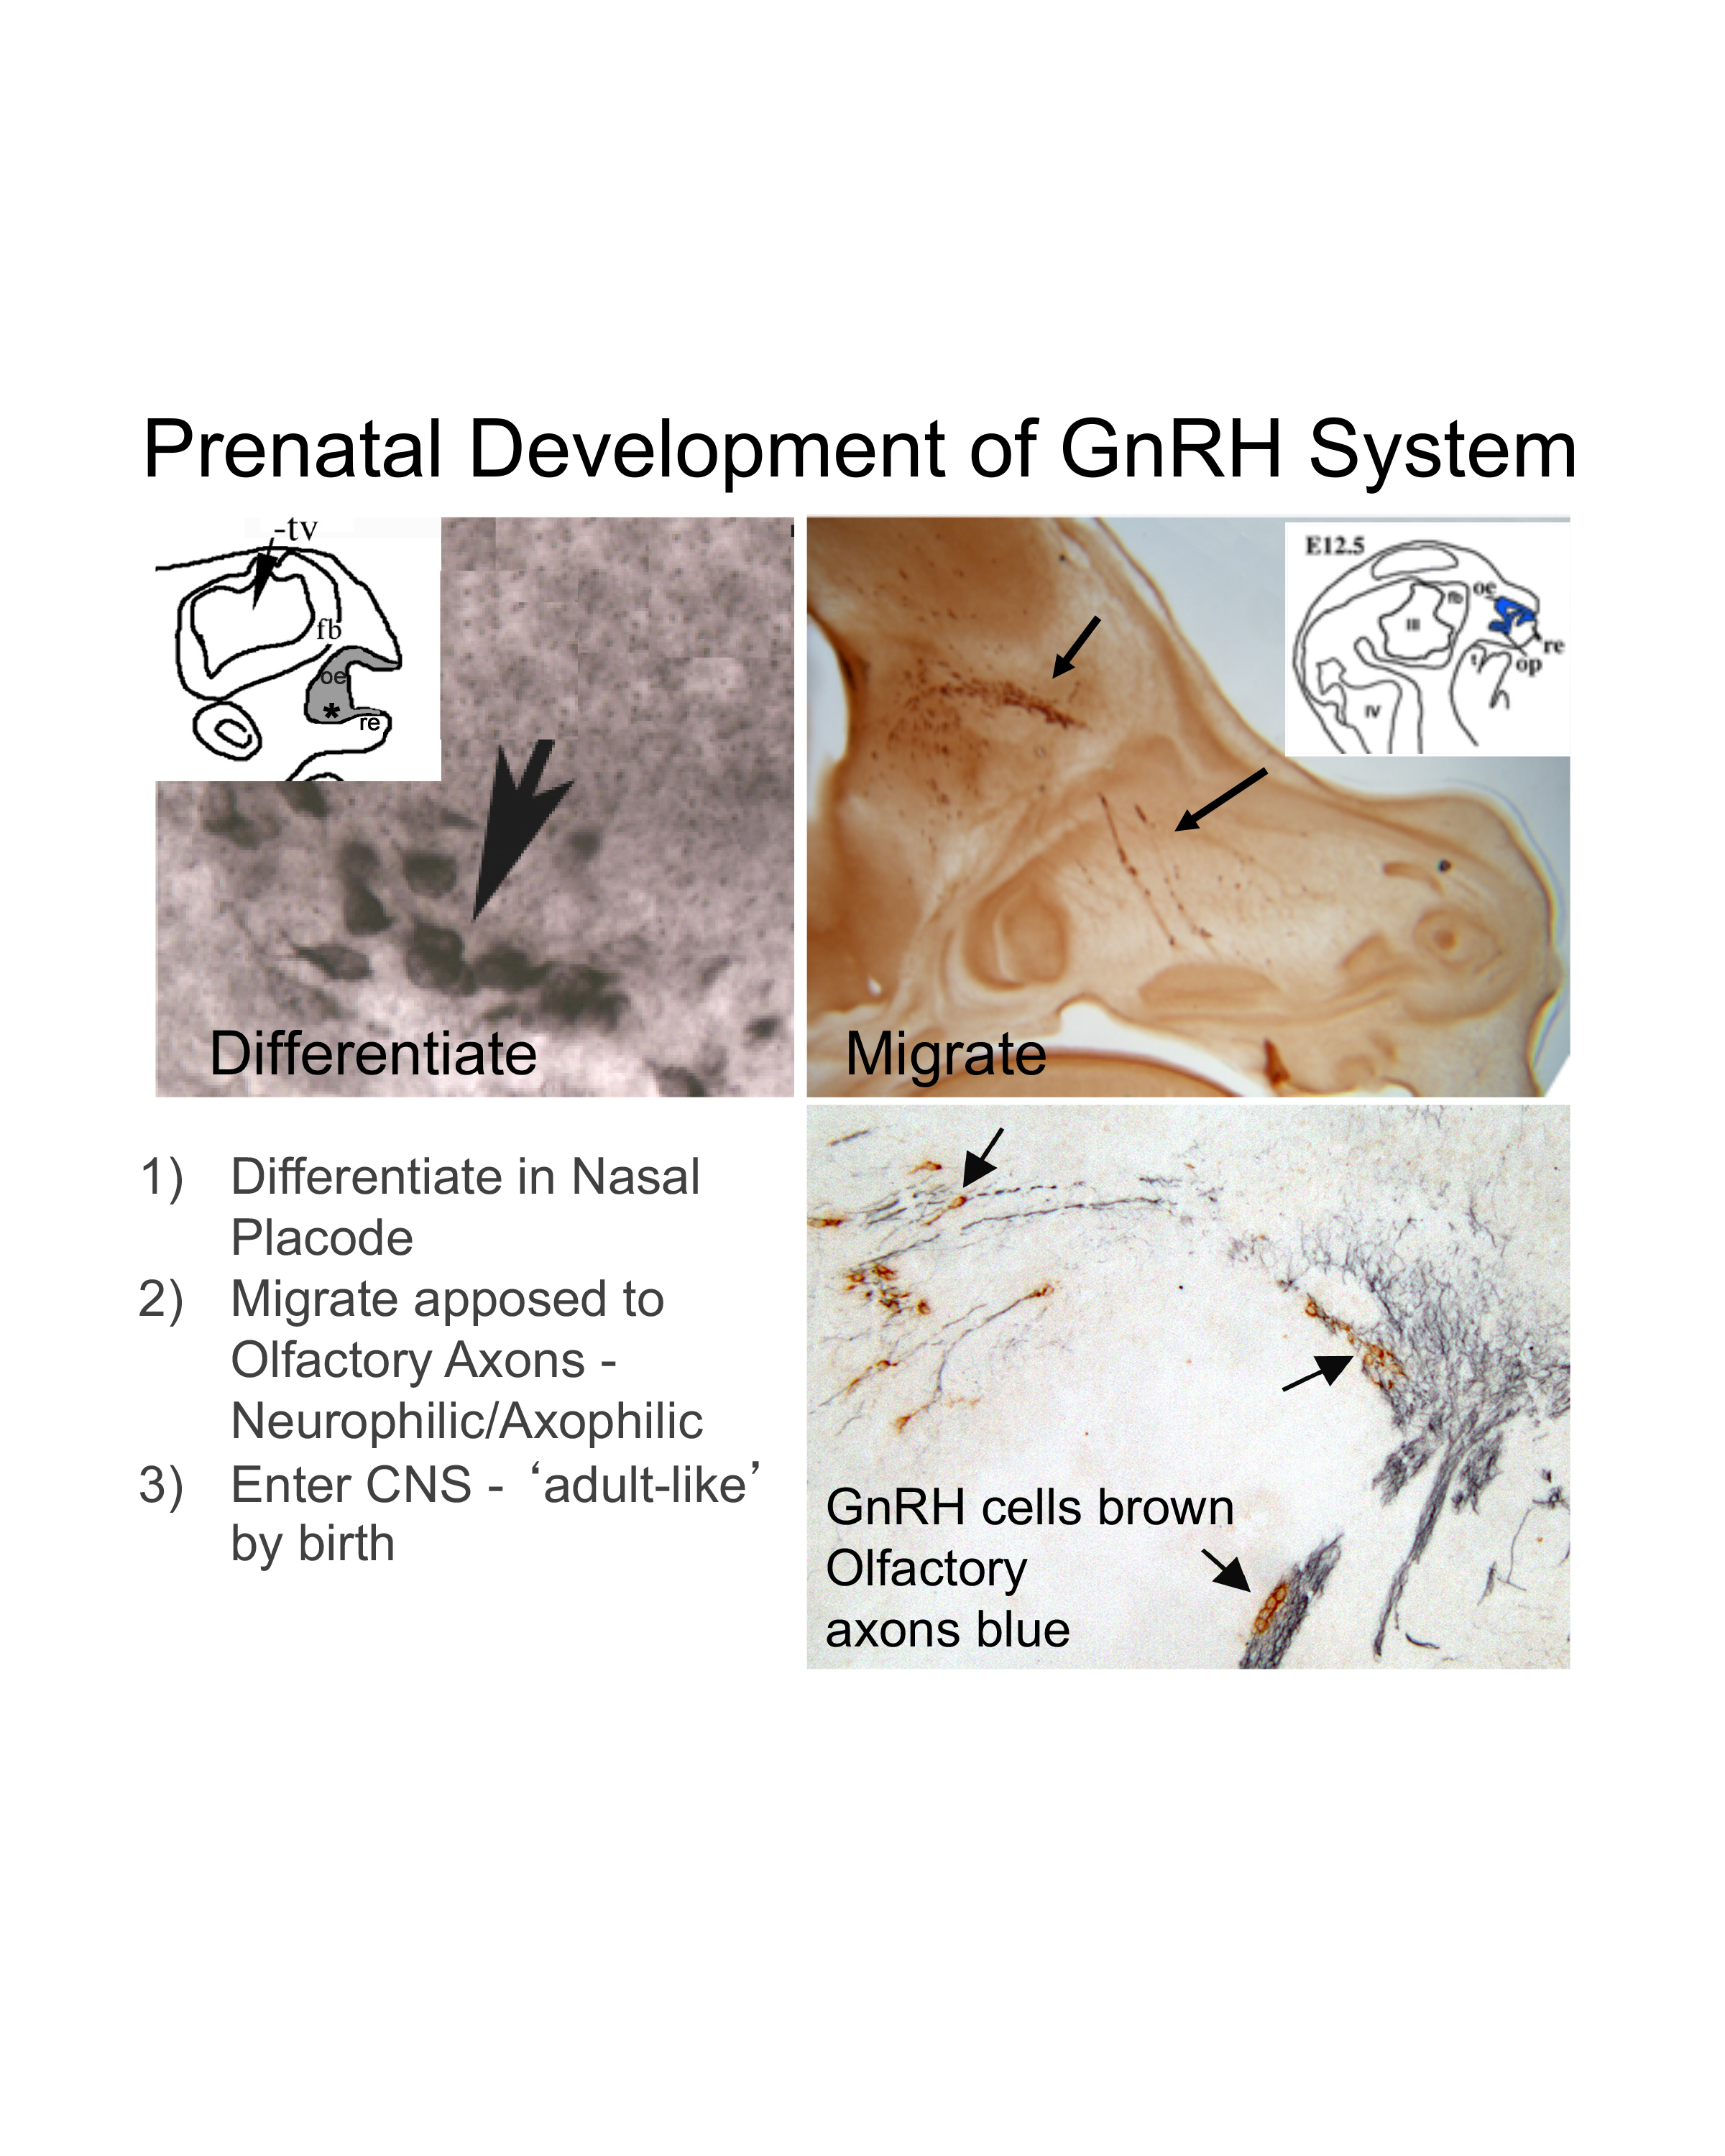 Prenatal GnRH Development